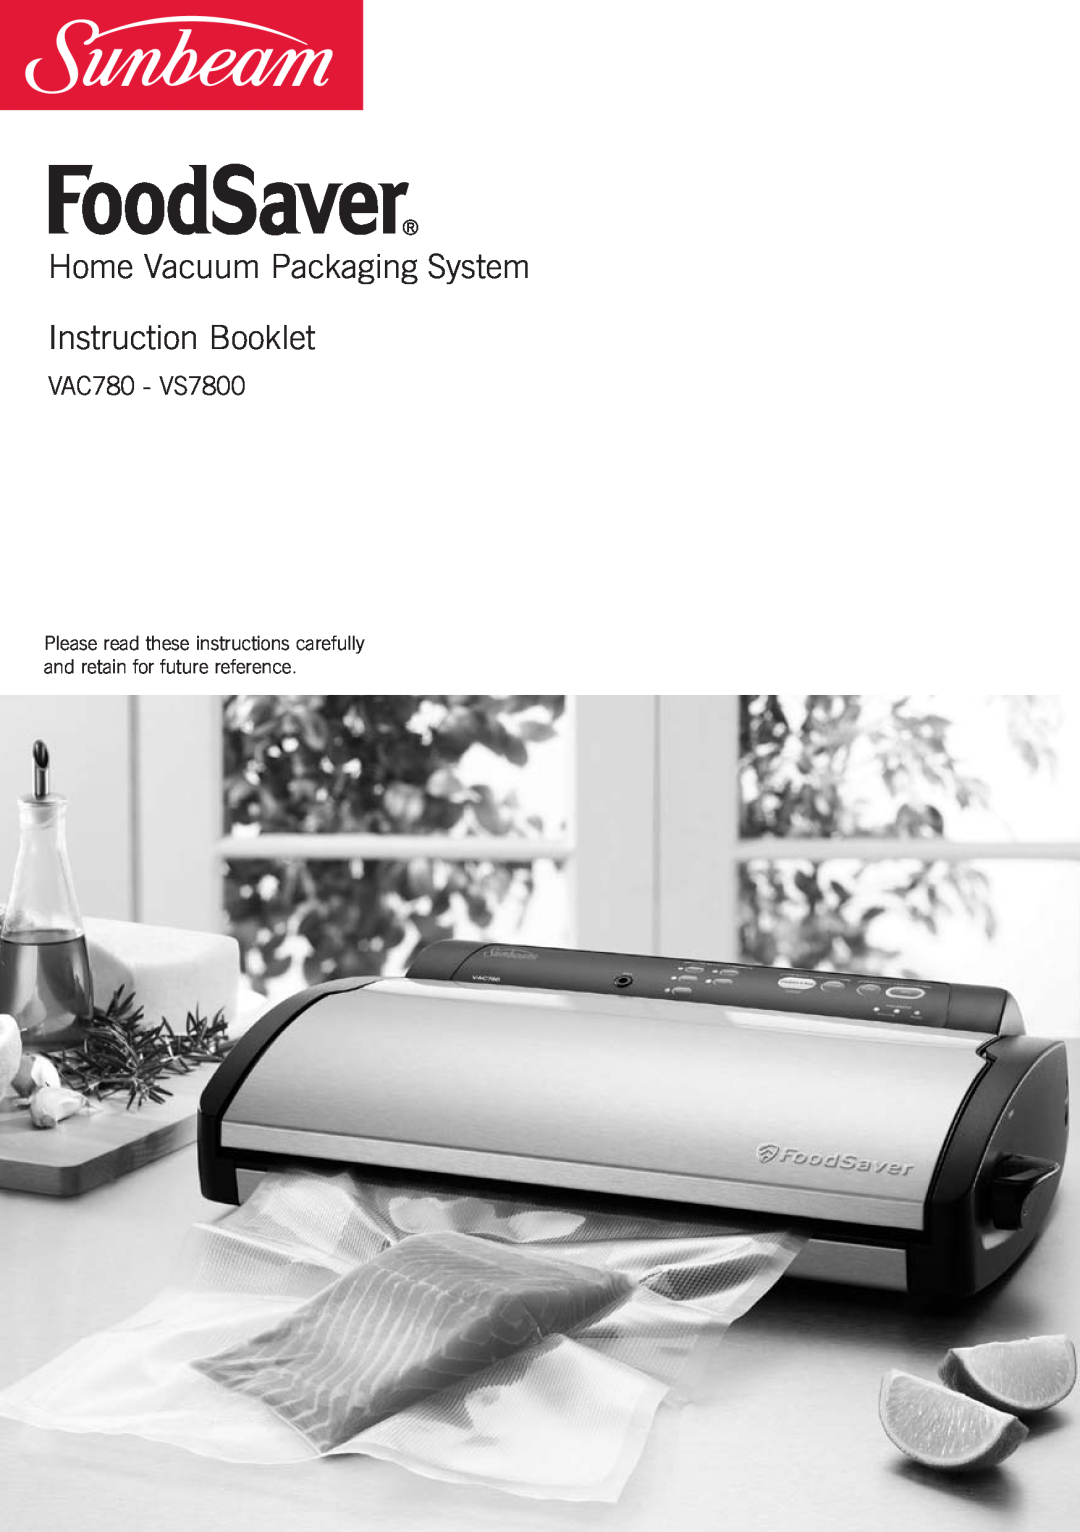 Sunbeam manual Home Vacuum Packaging System Instruction Booklet, VAC780 - VS7800 